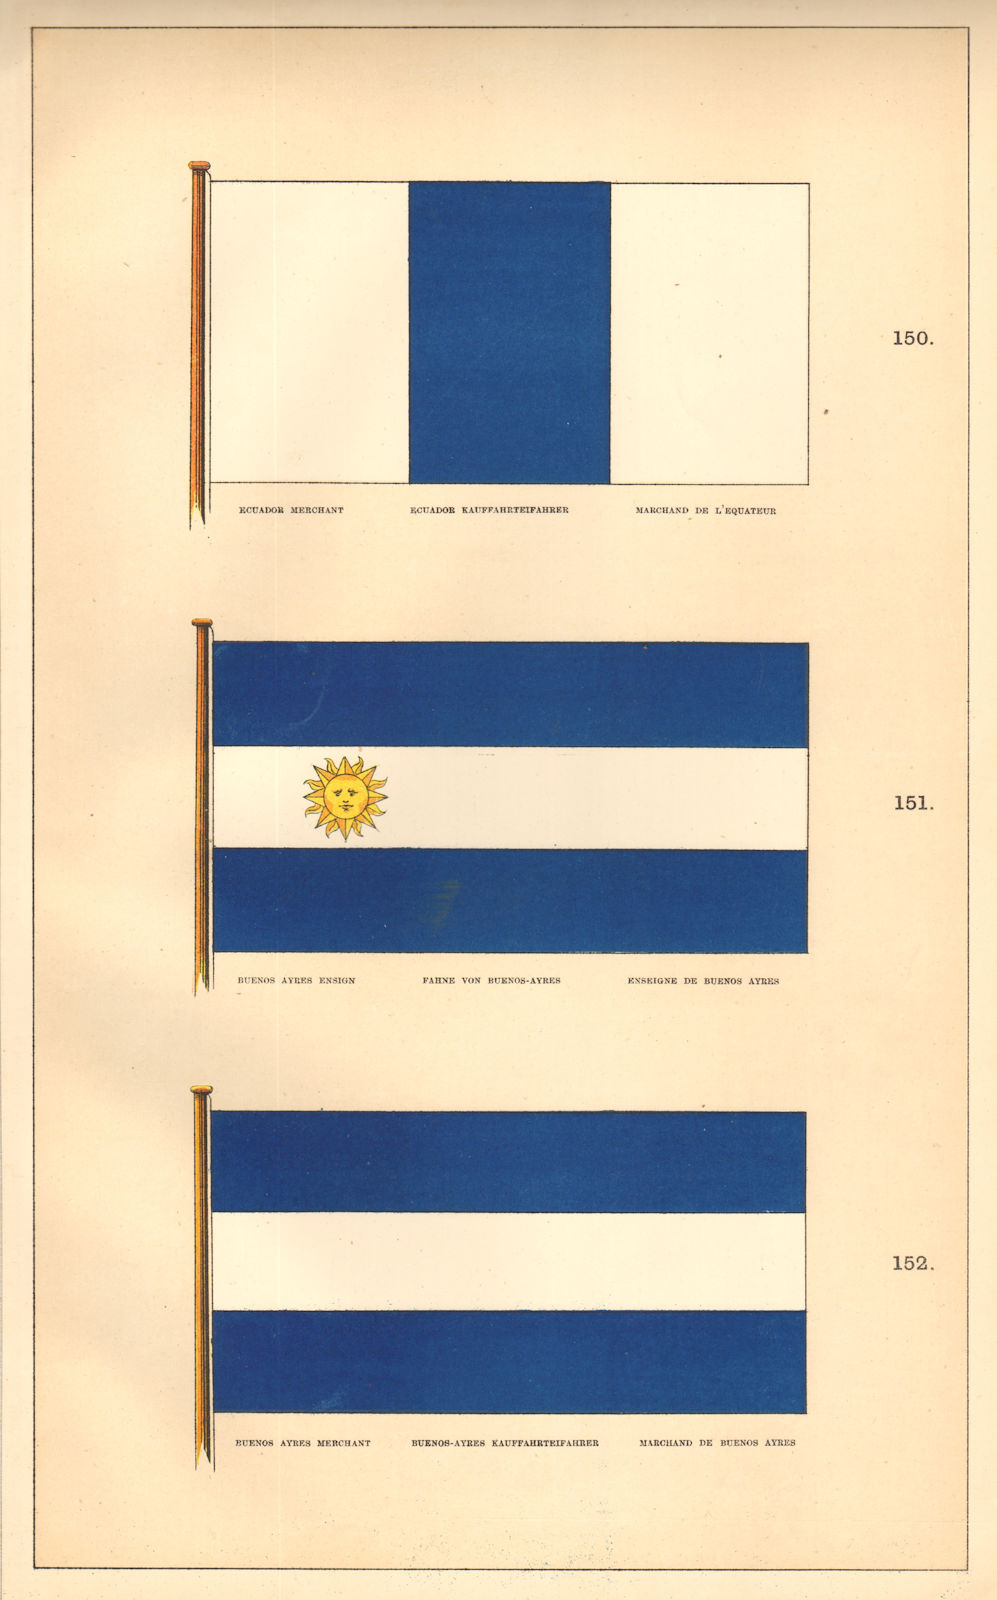 ARGENTINE MARITIME FLAGS. "Buenos Ayres" Ecuador ensign merchant. HOUNSELL 1873